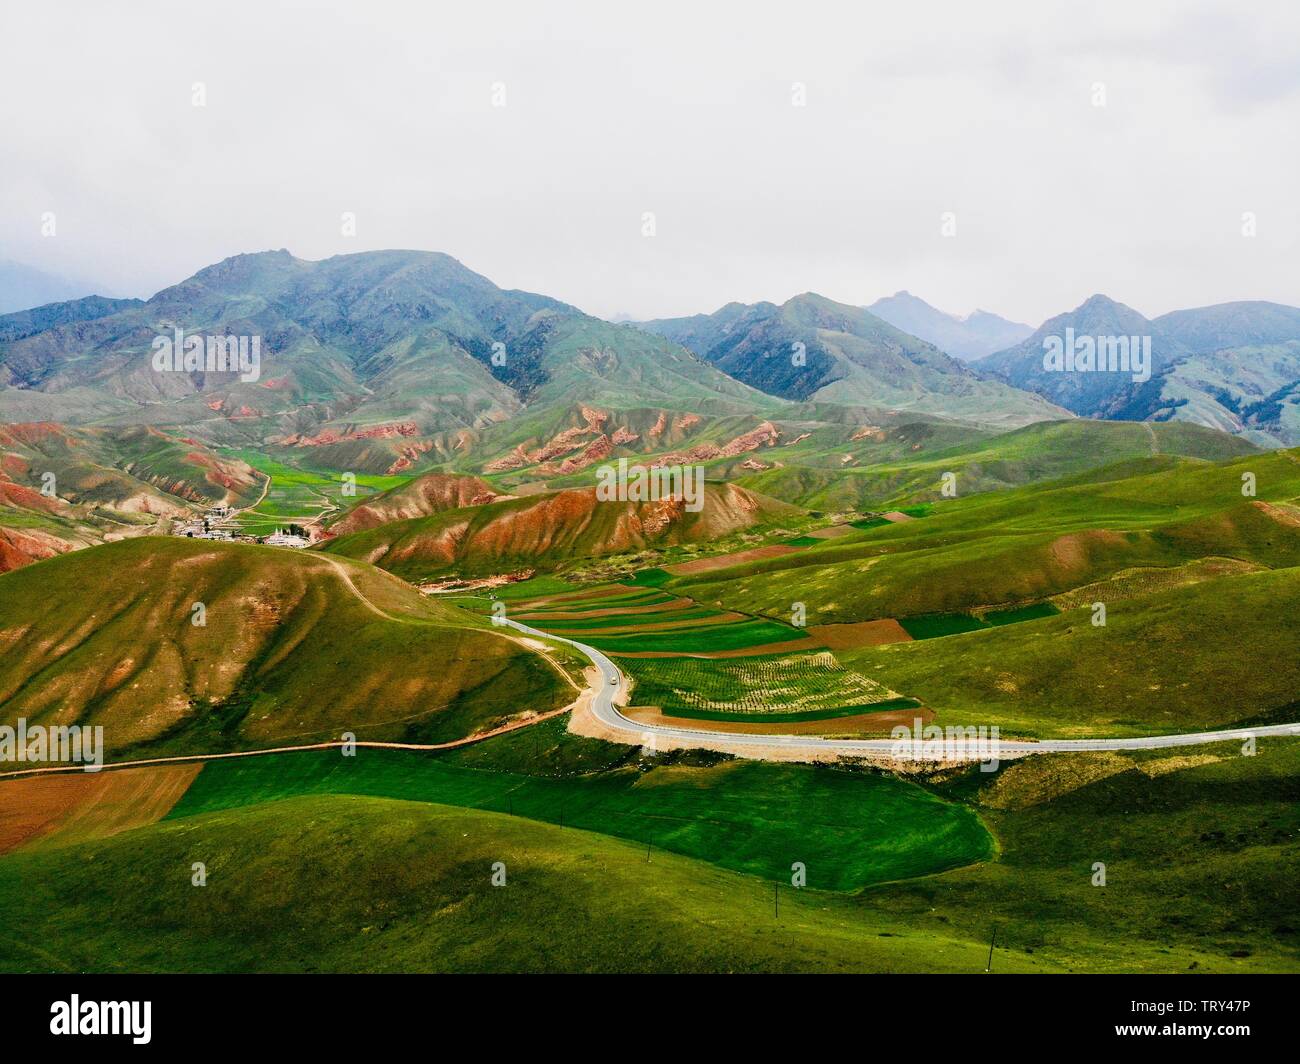 The midair view of Qilian Mountains. Stock Photo